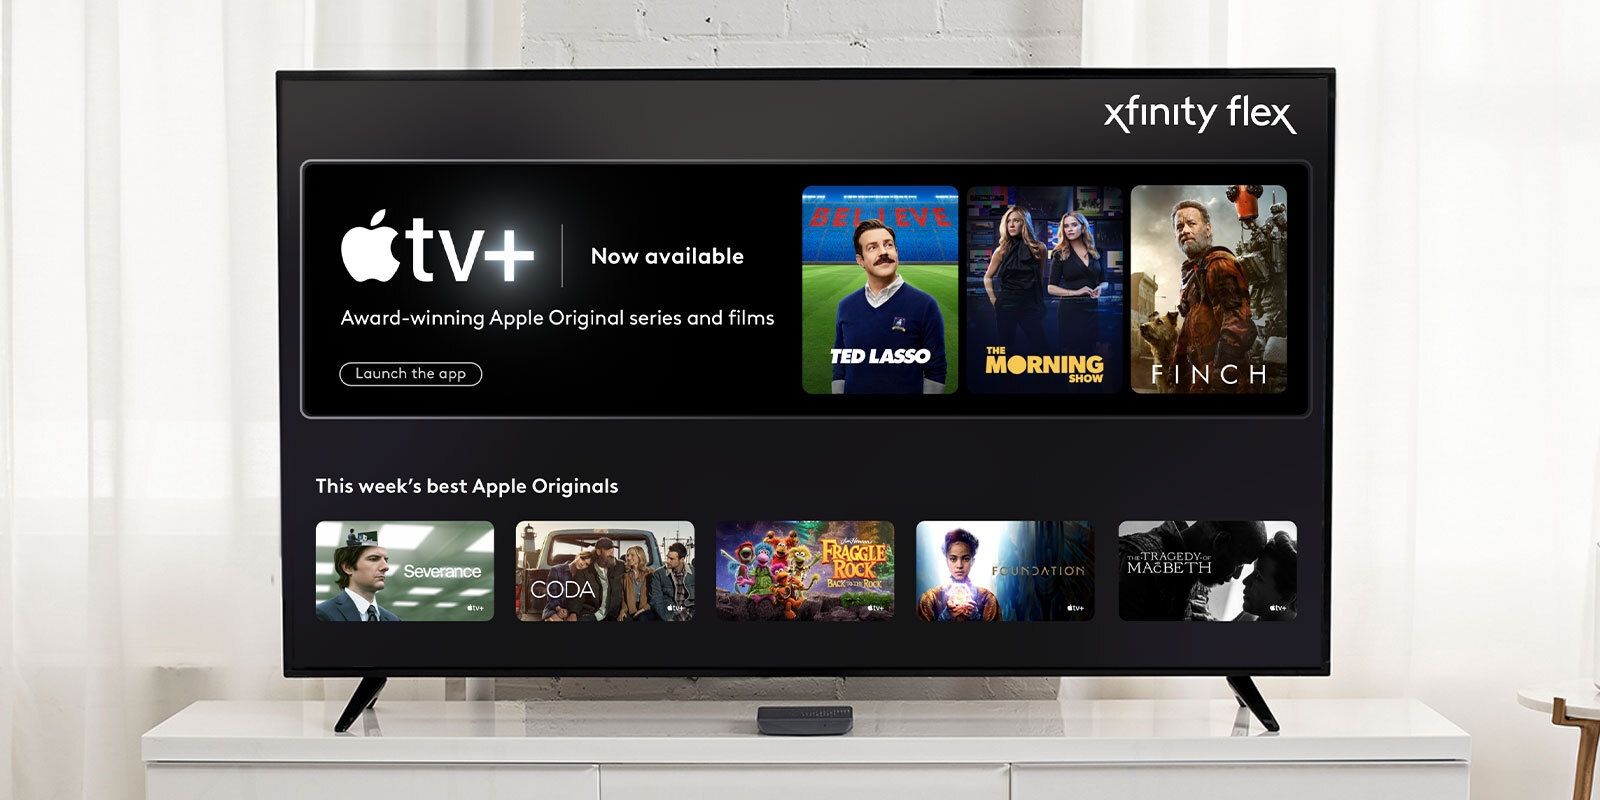 Apple TV+ on an Xfinity set top box.